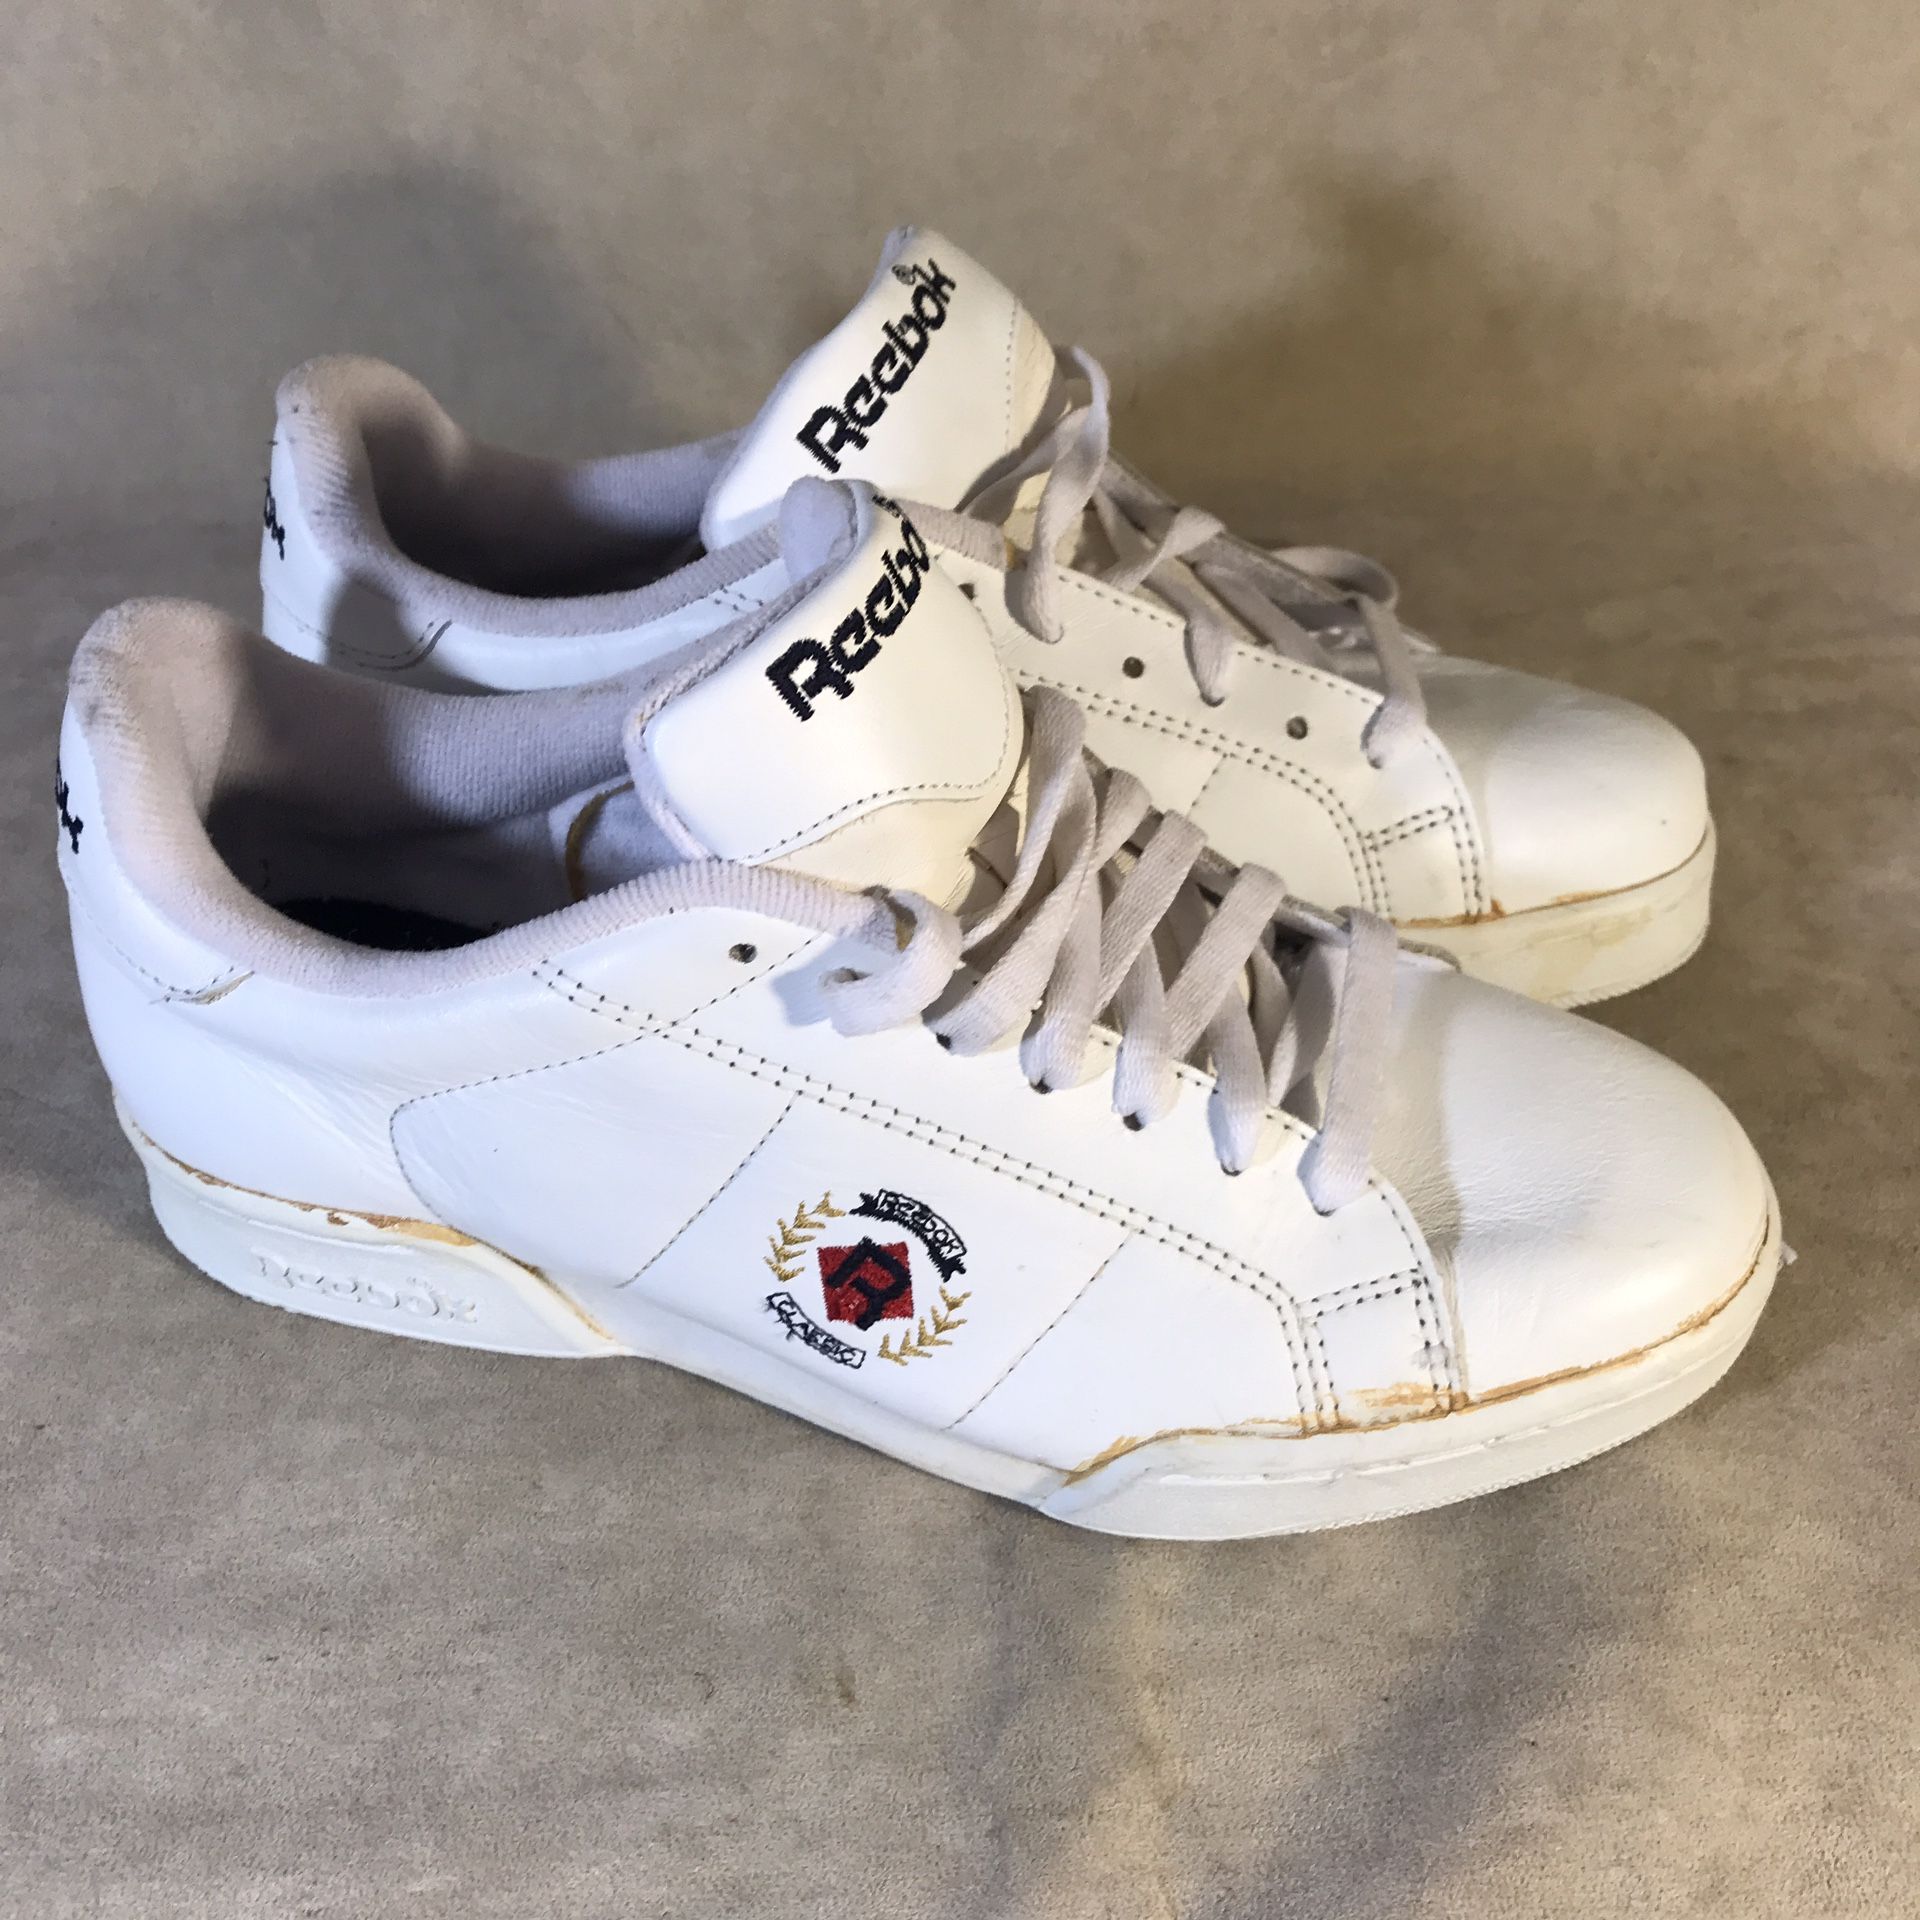 Vintage Reebok Classic Tennis Shoes Sneakers Men’s Size 8 1/2